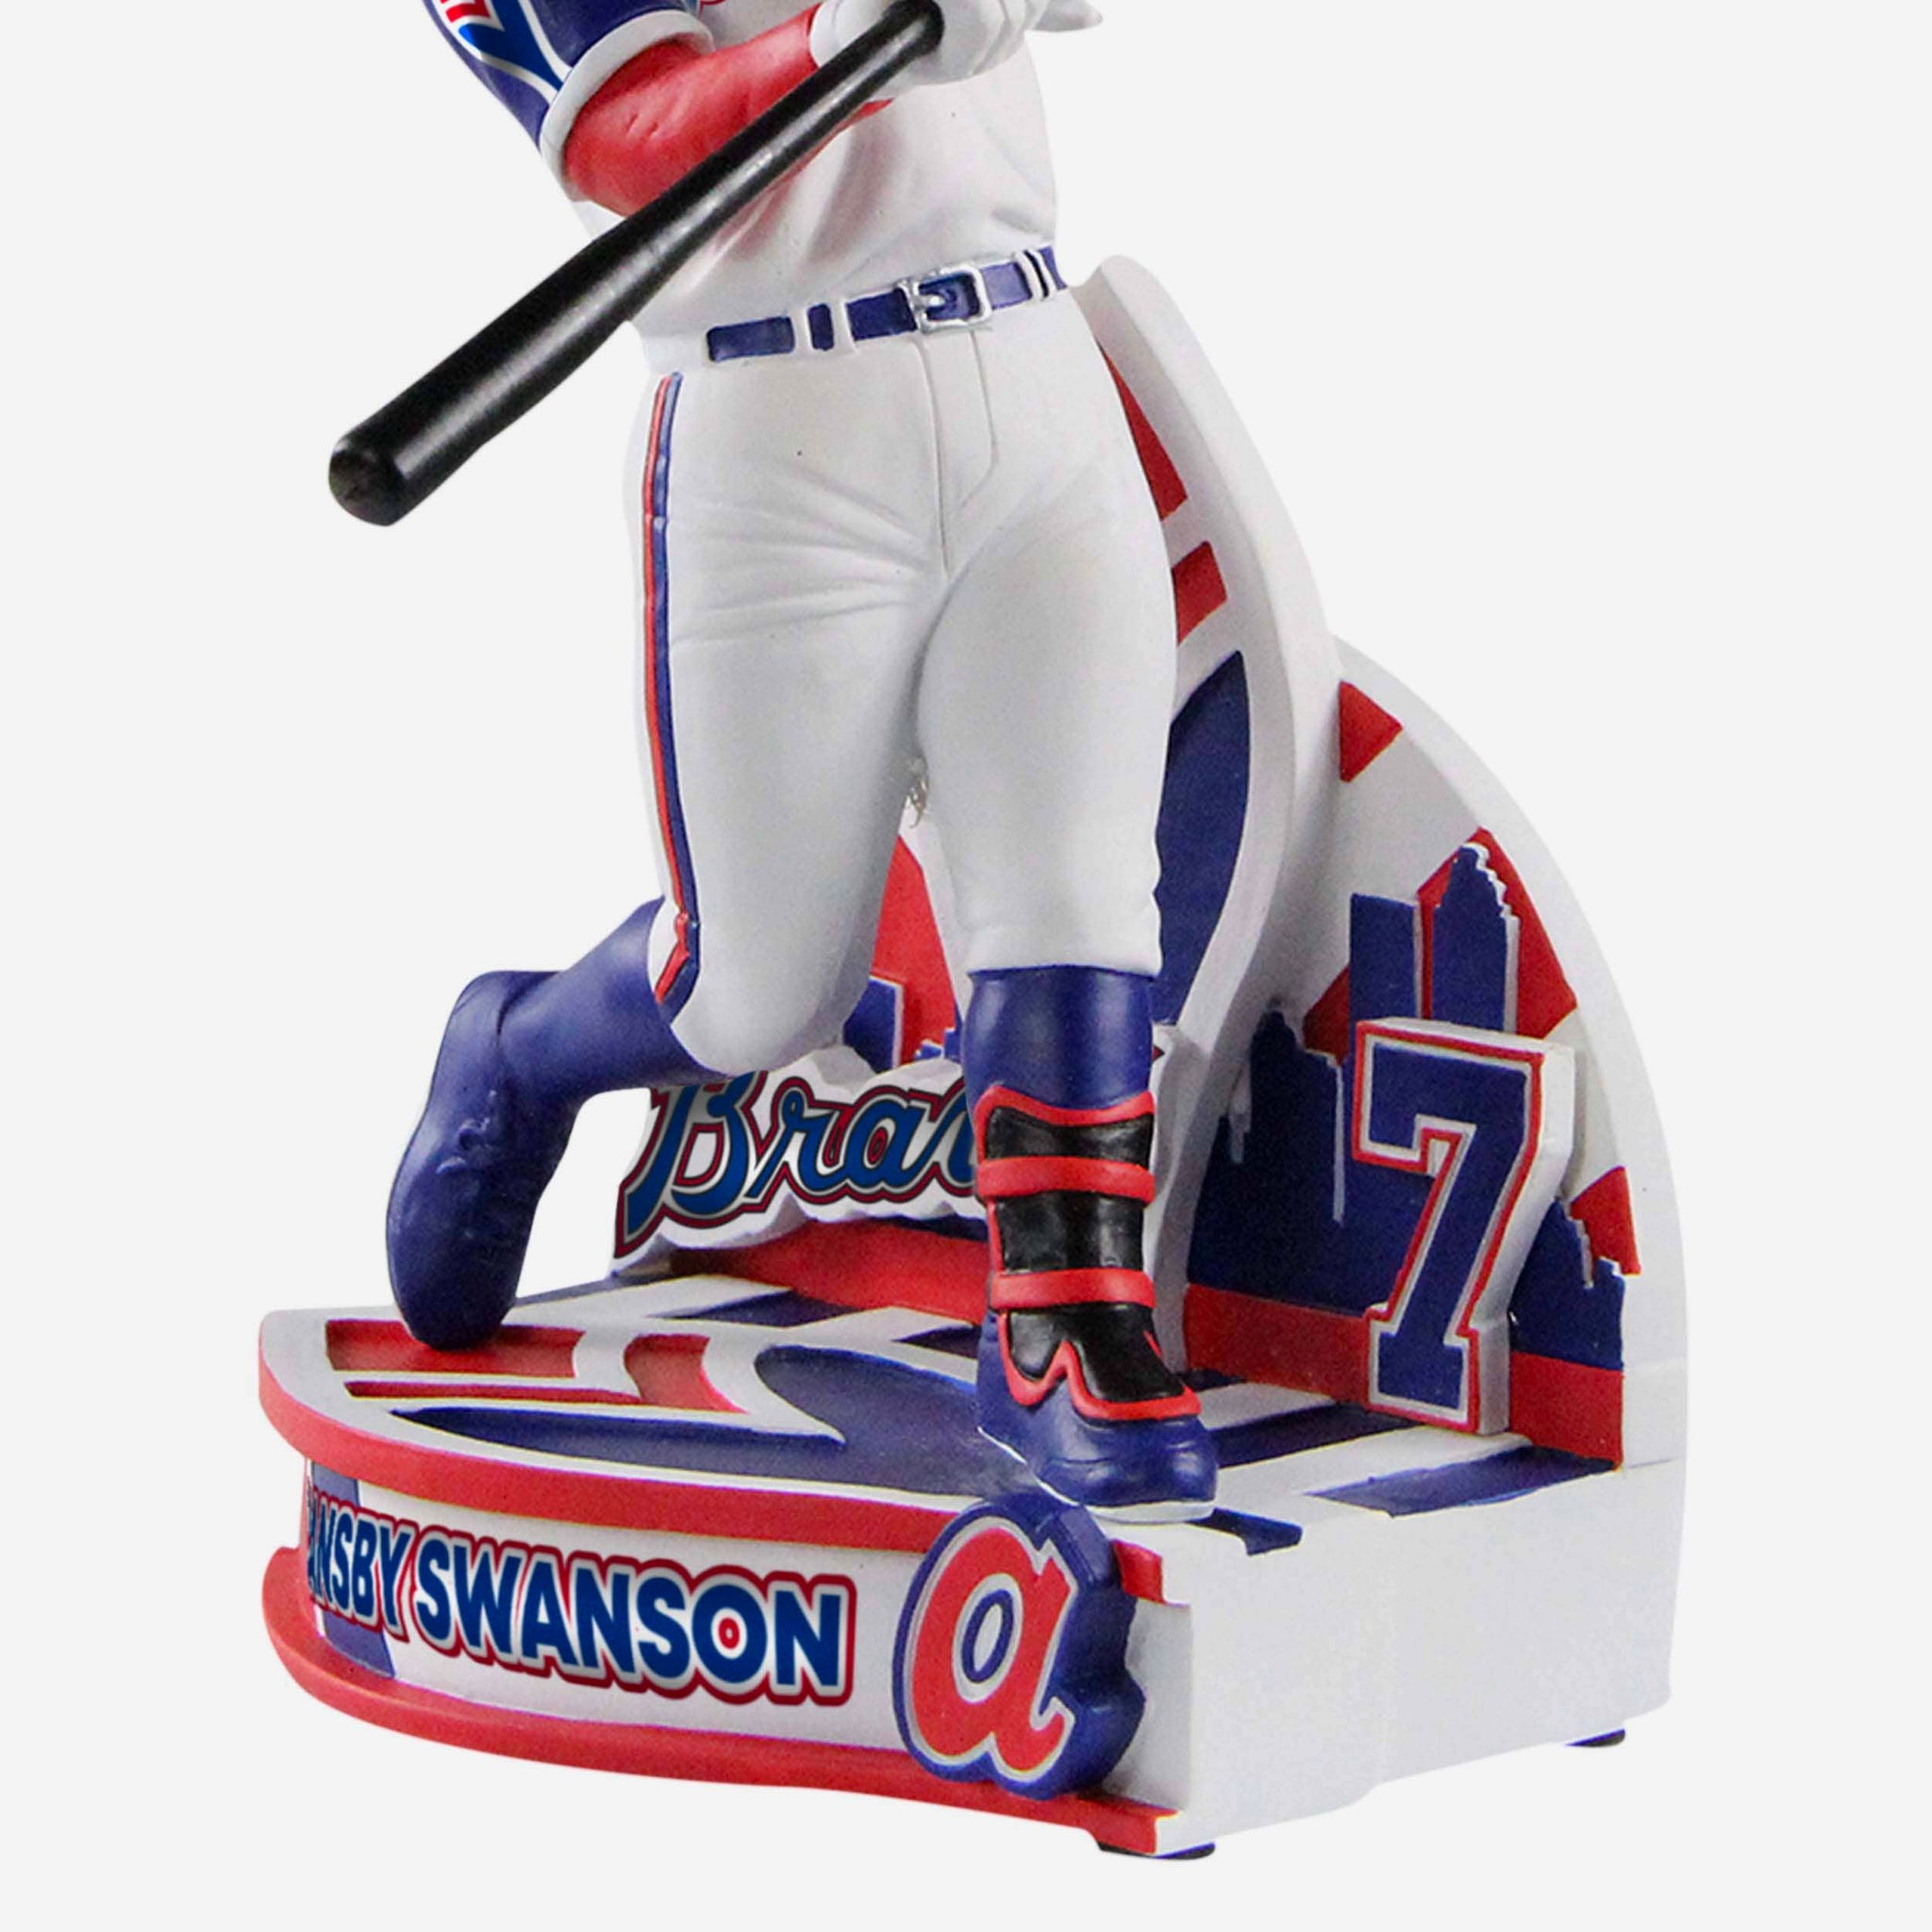 Swanson (Dansby Swanson) Atlanta Braves - Officially Licensed MLB Pr